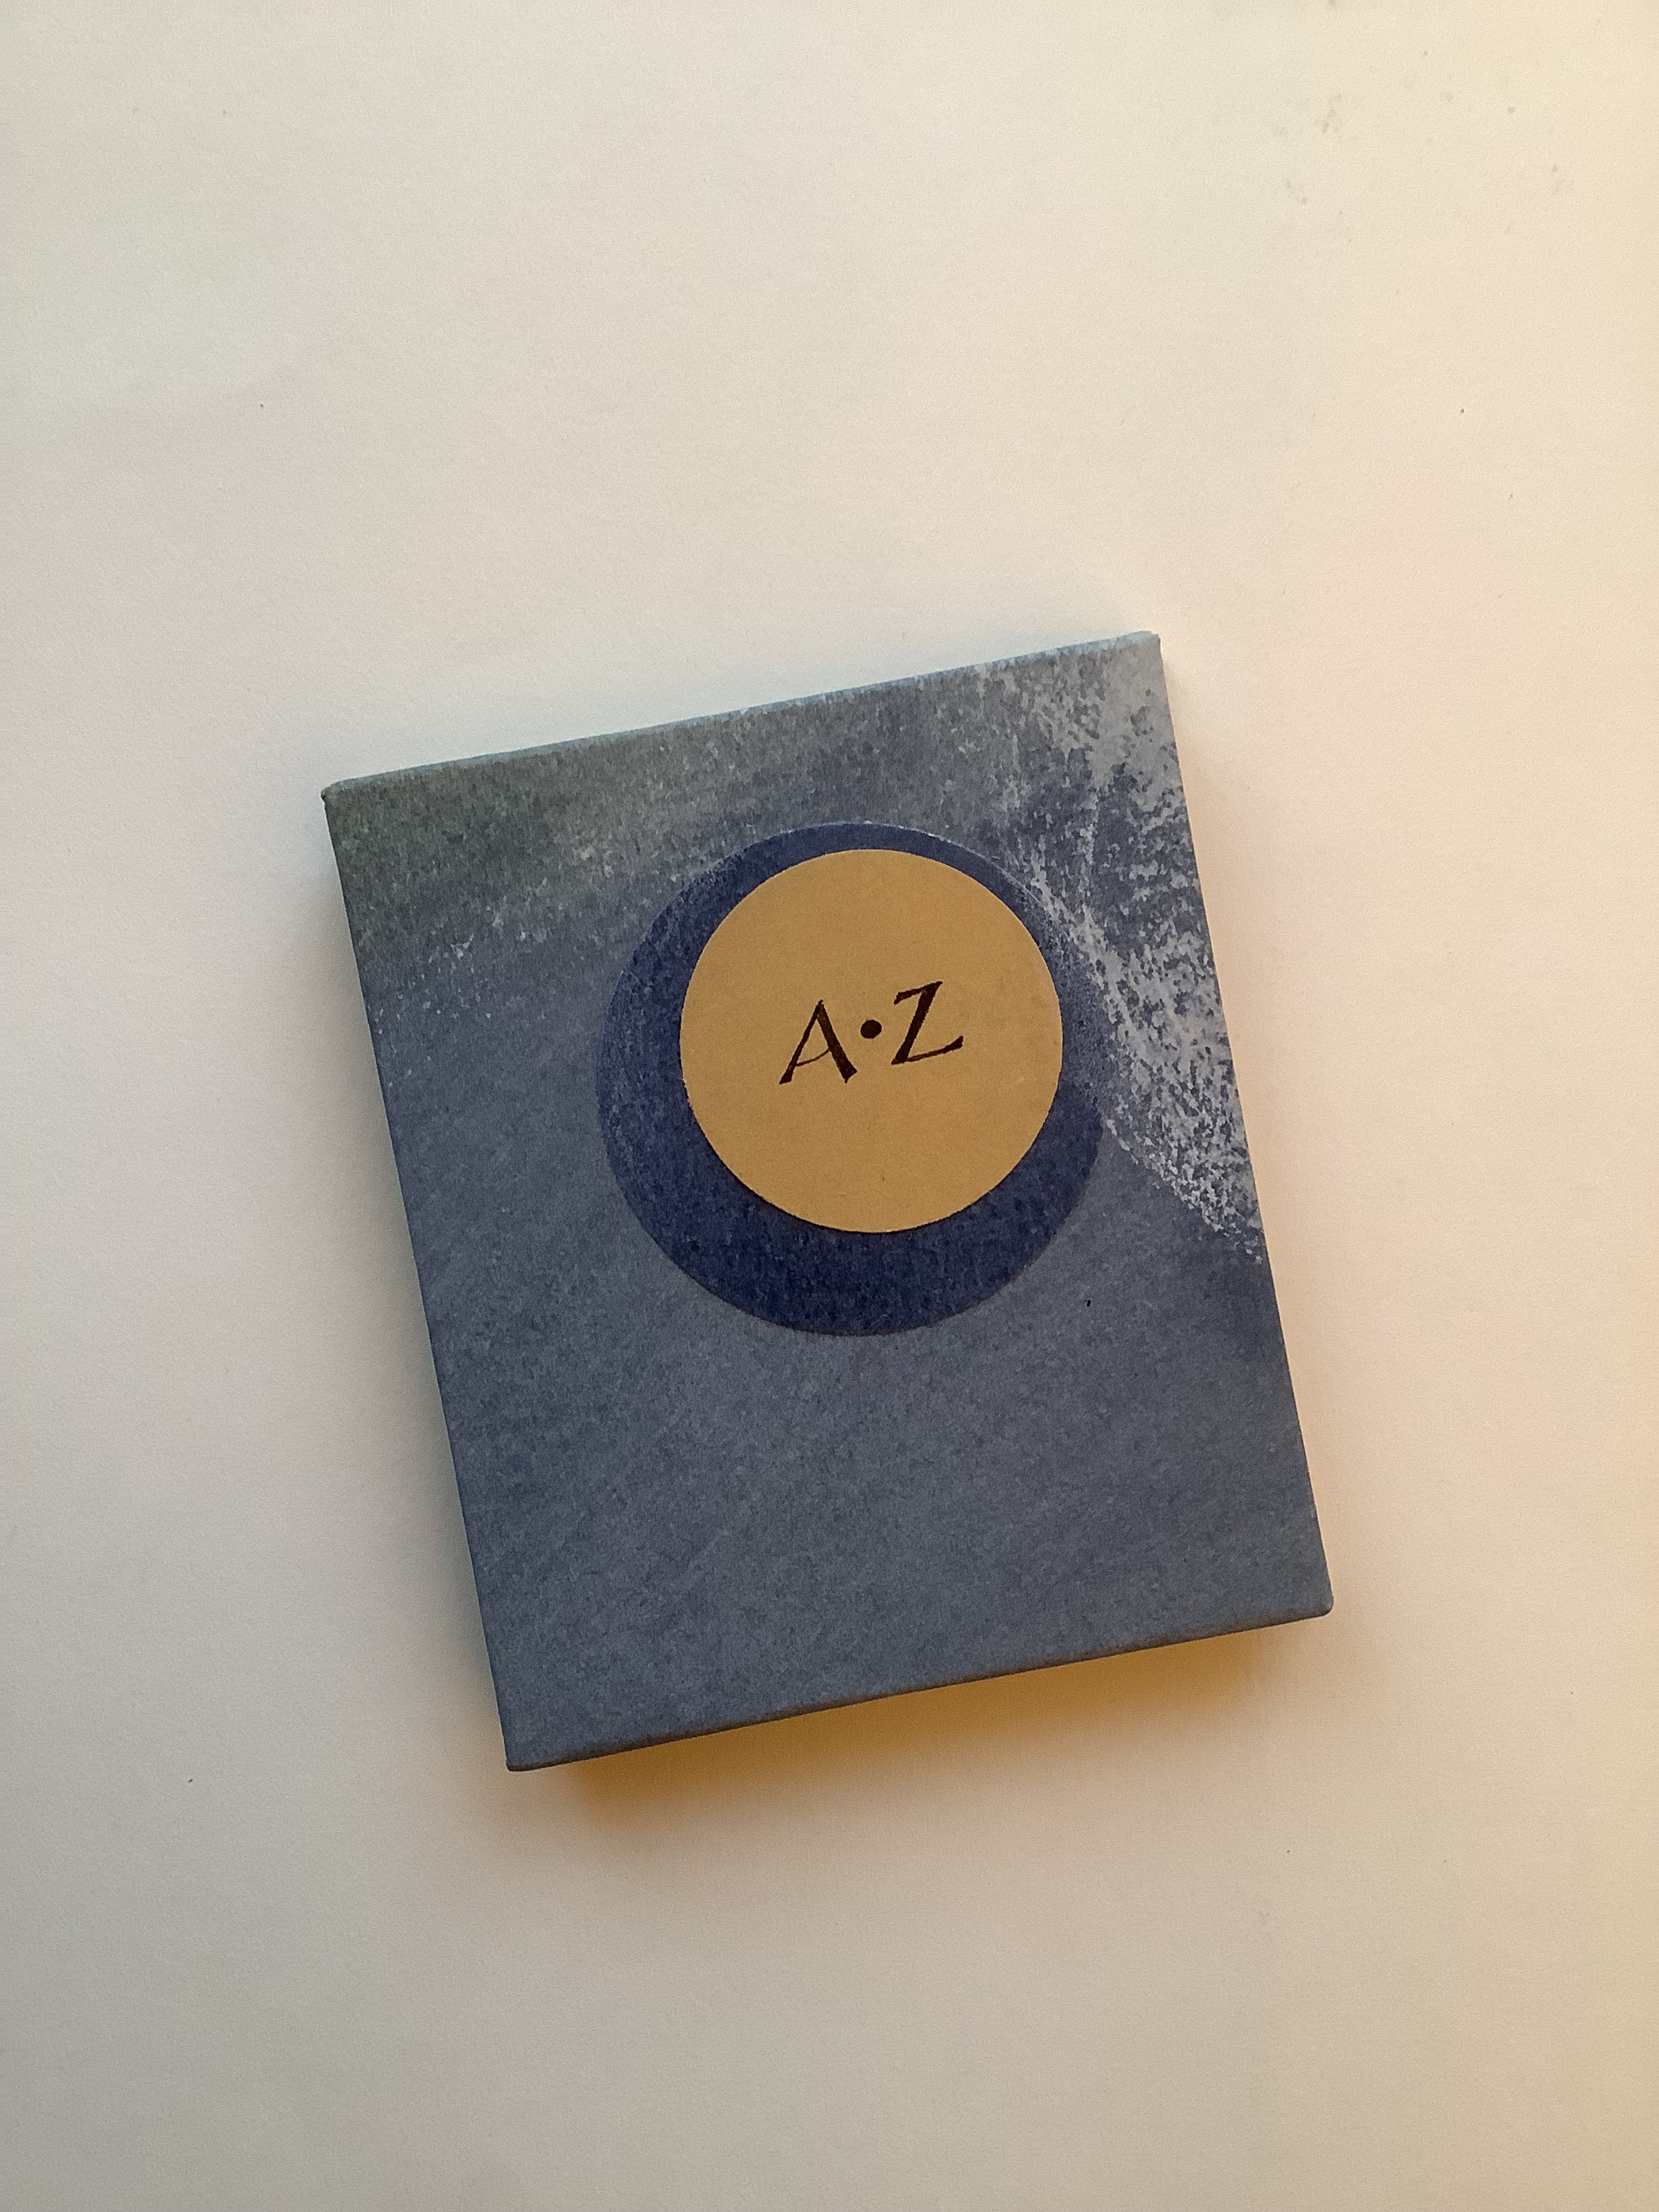 A-Z Accordion Book Cover